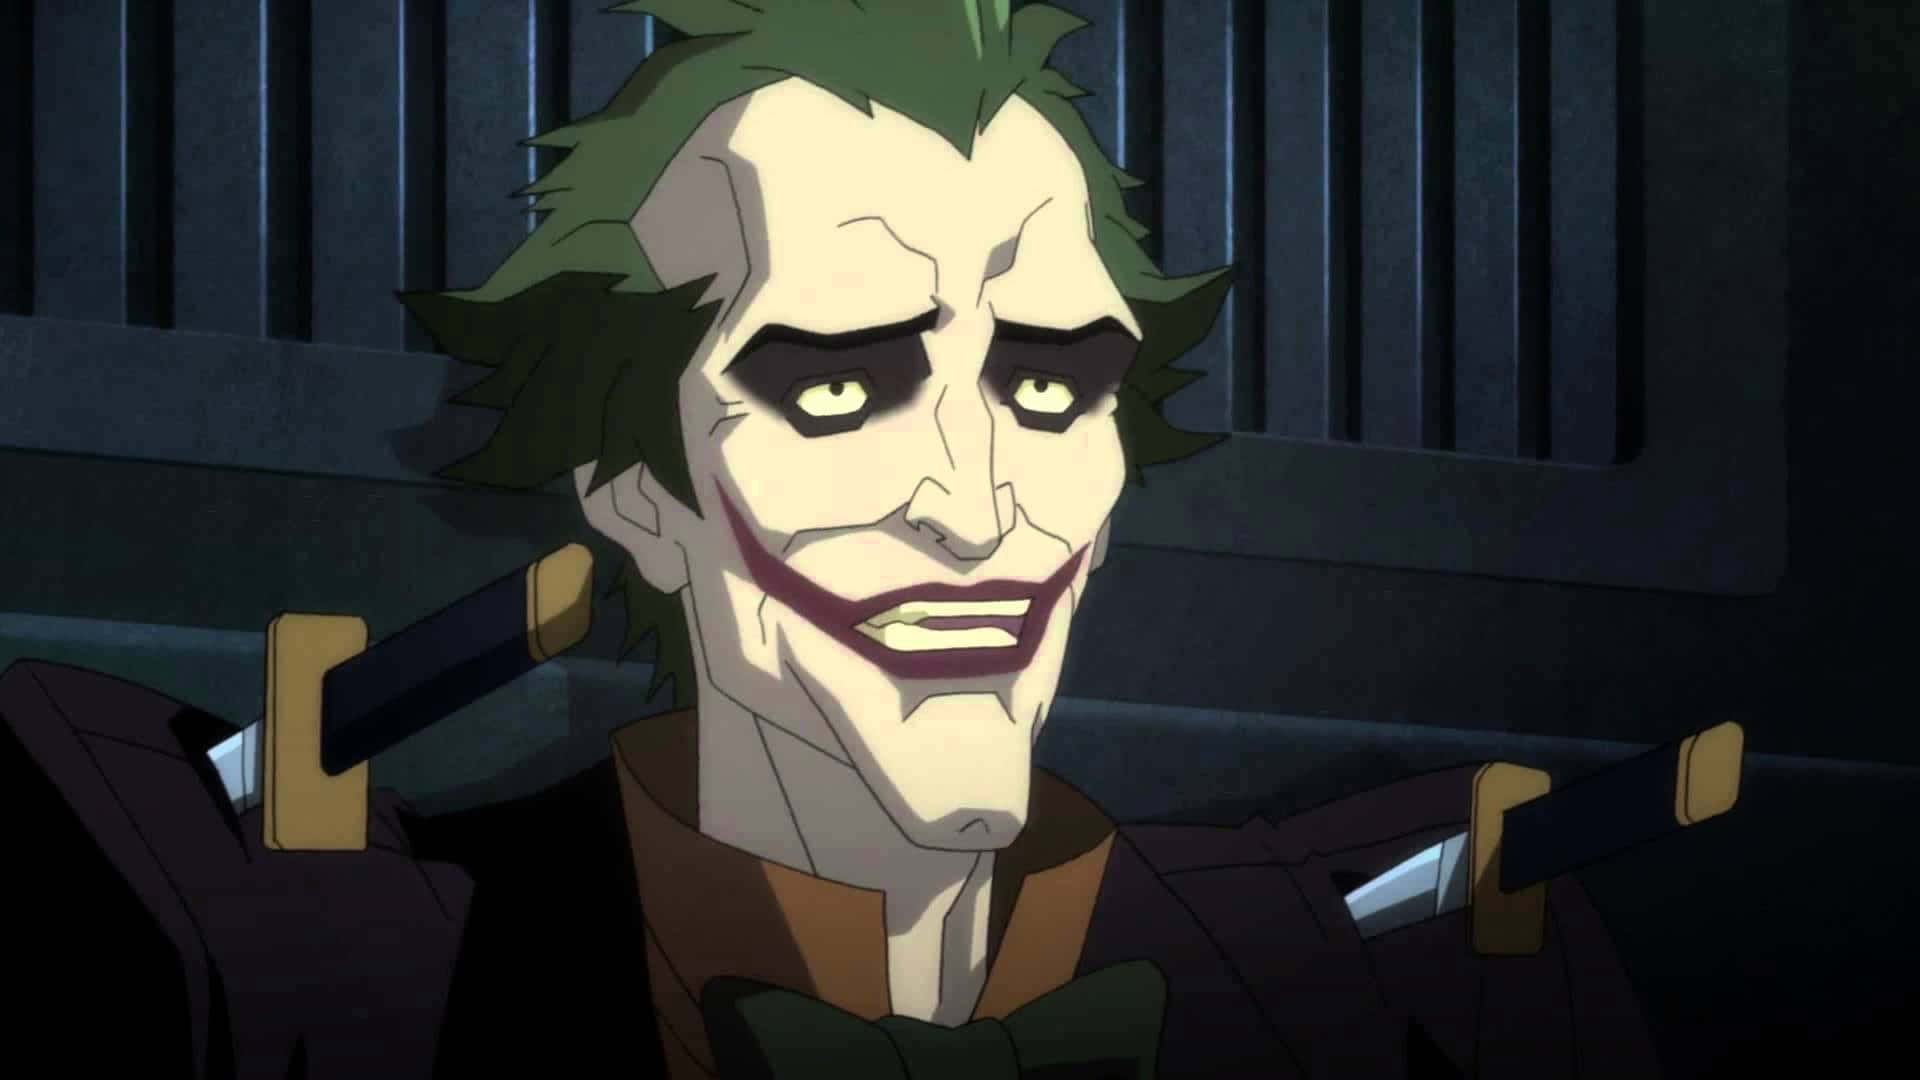 Download The Dark Knight in Action - Batman Against Joker in Assault on ...